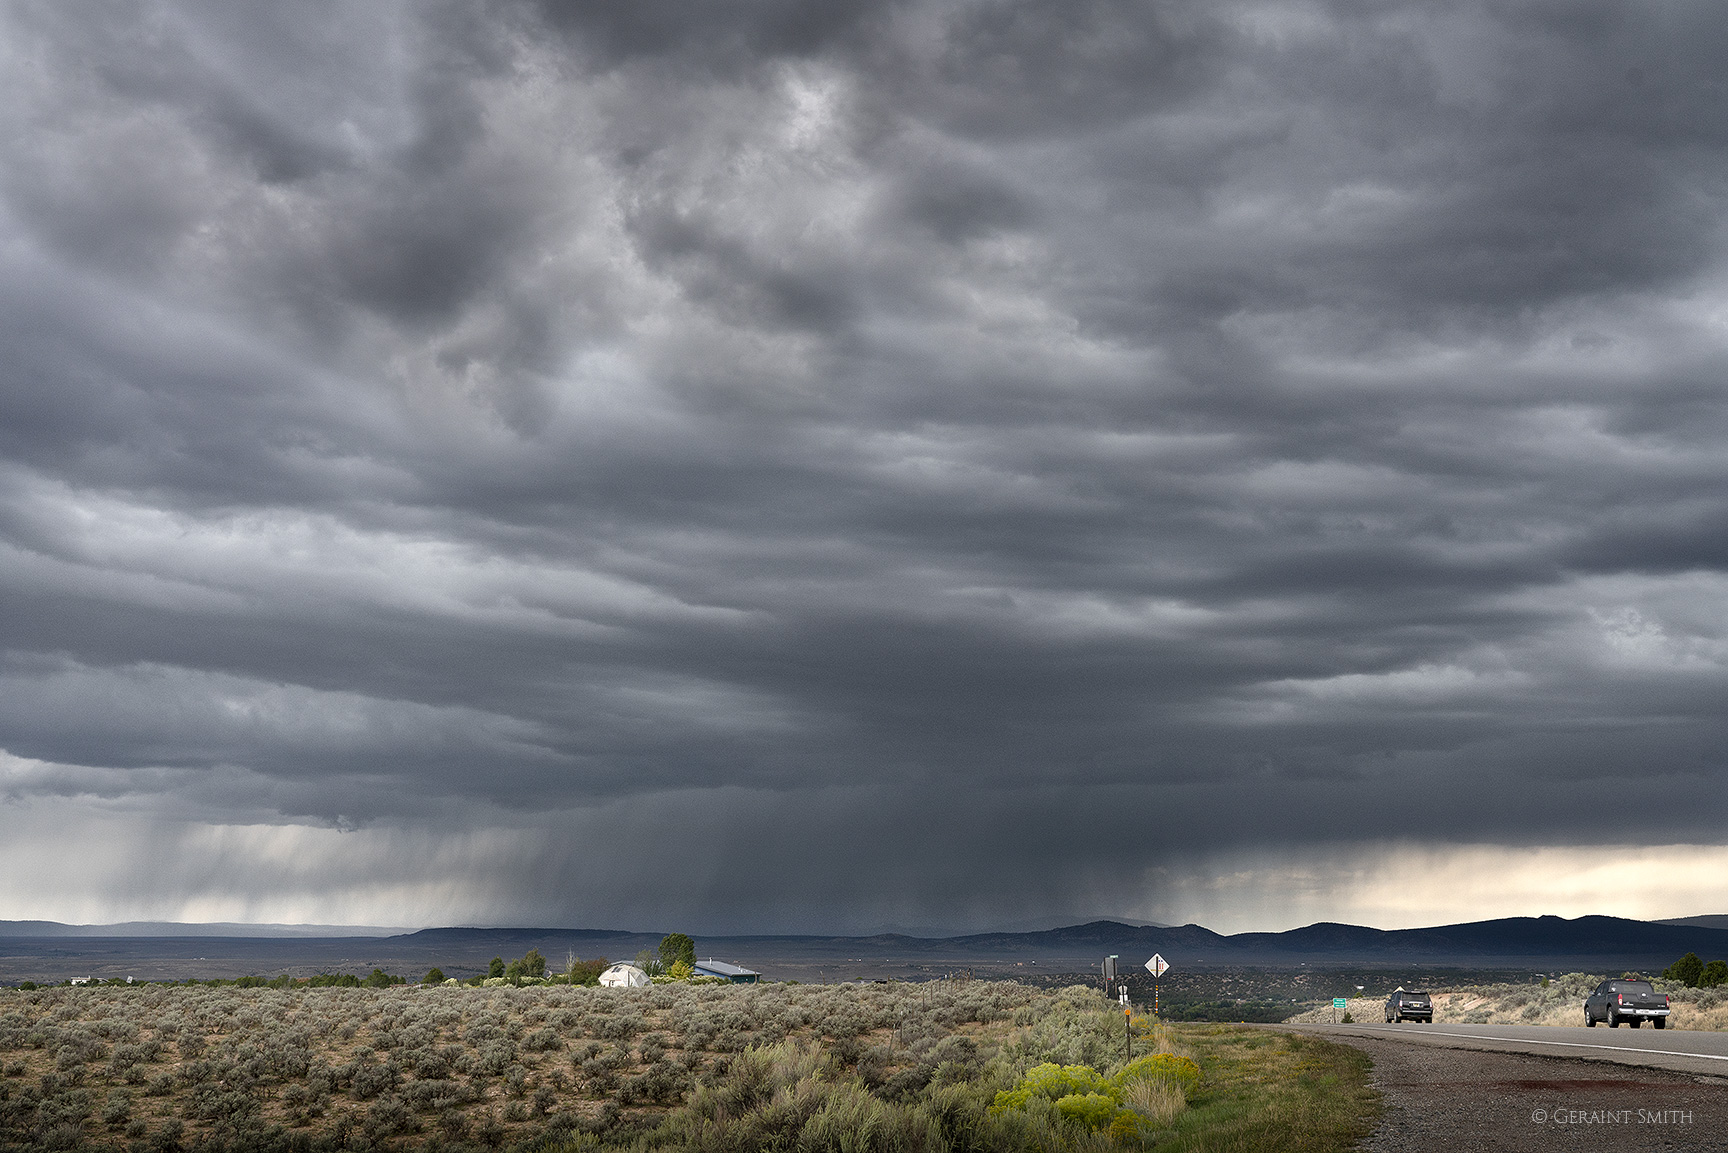 Storm across the Taos Plateau